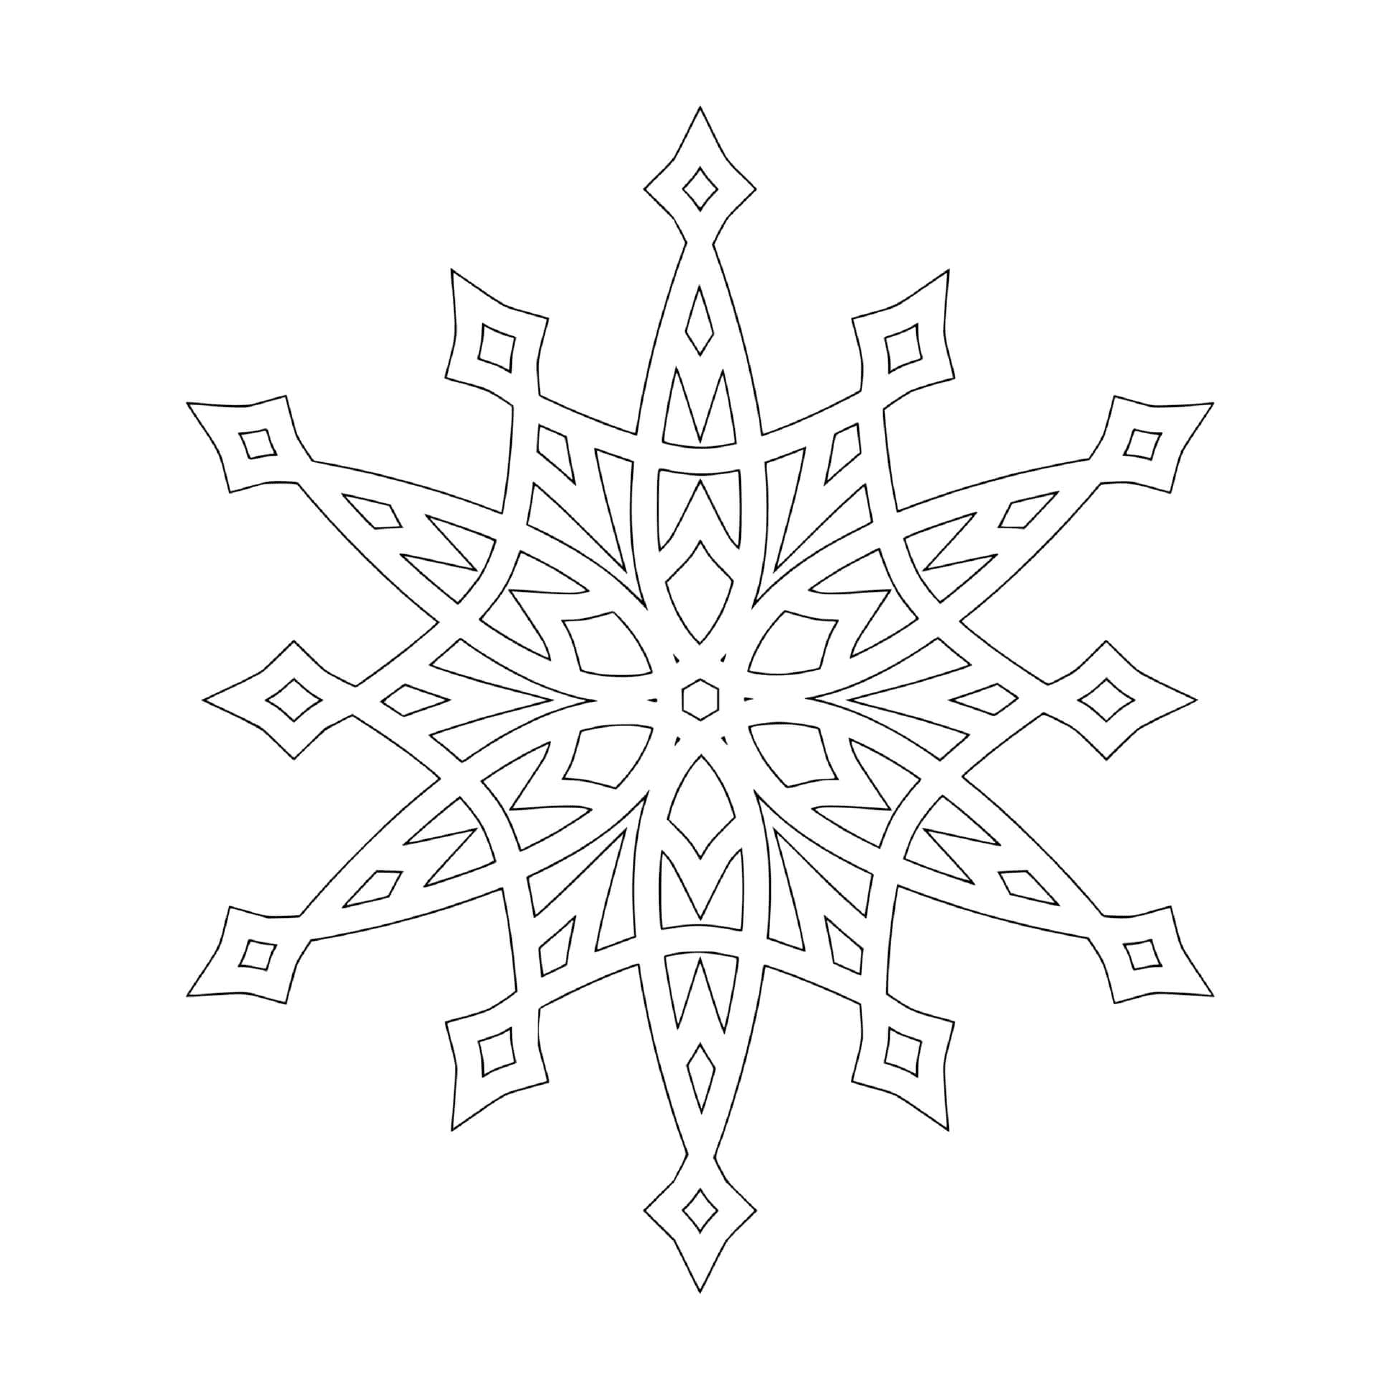   Un design complexe de flocon de neige 